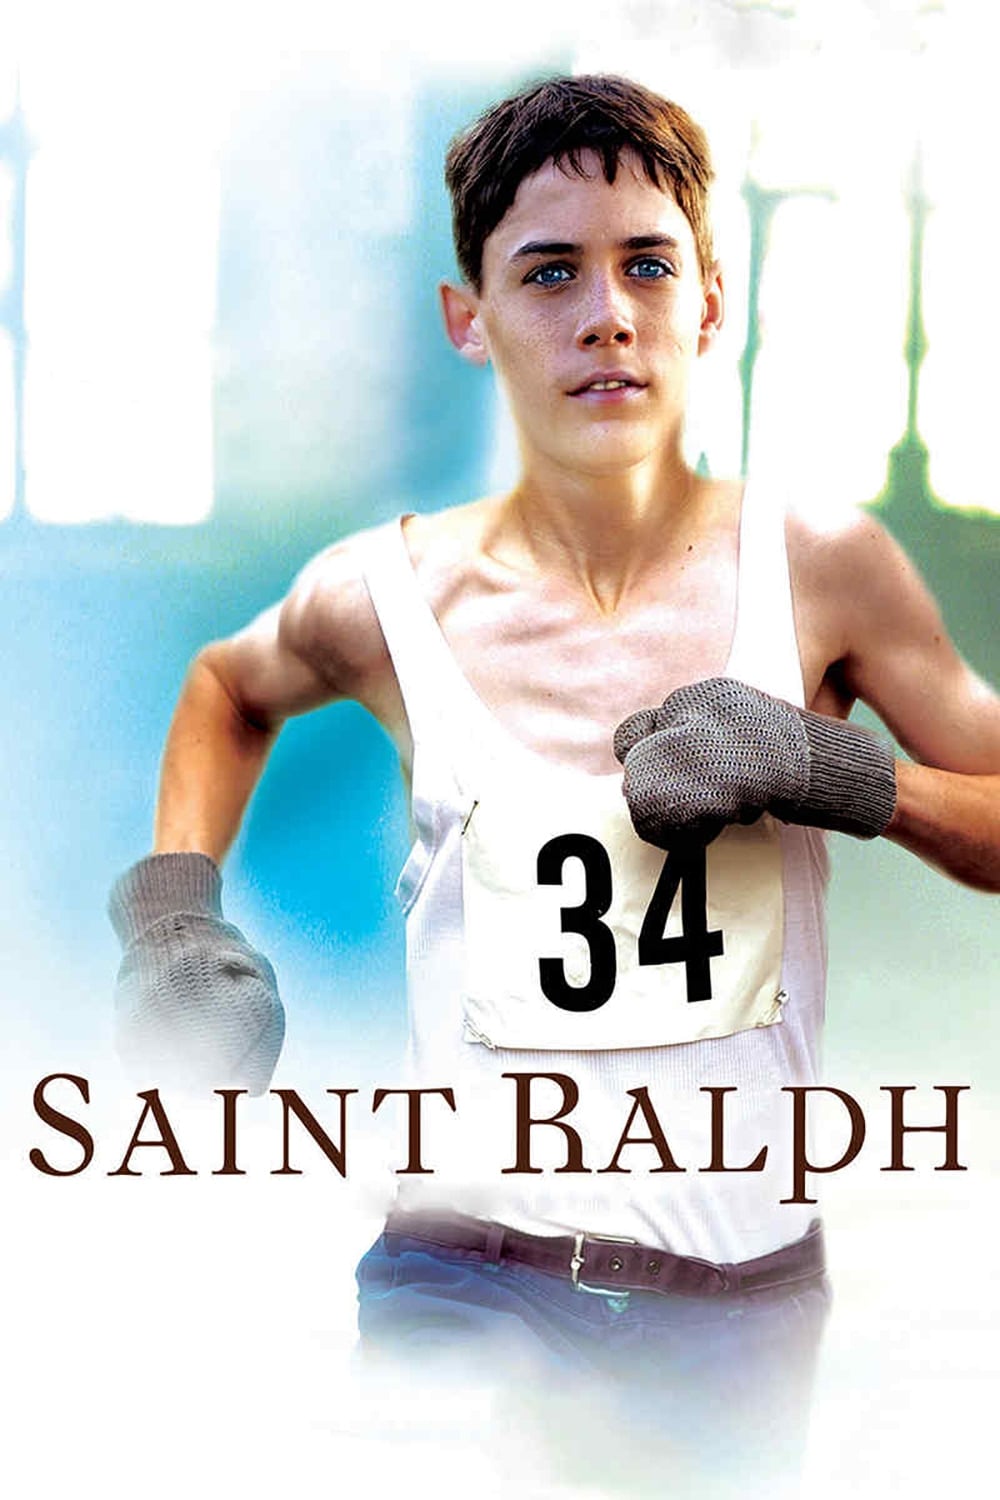 Saint Ralph (2005)